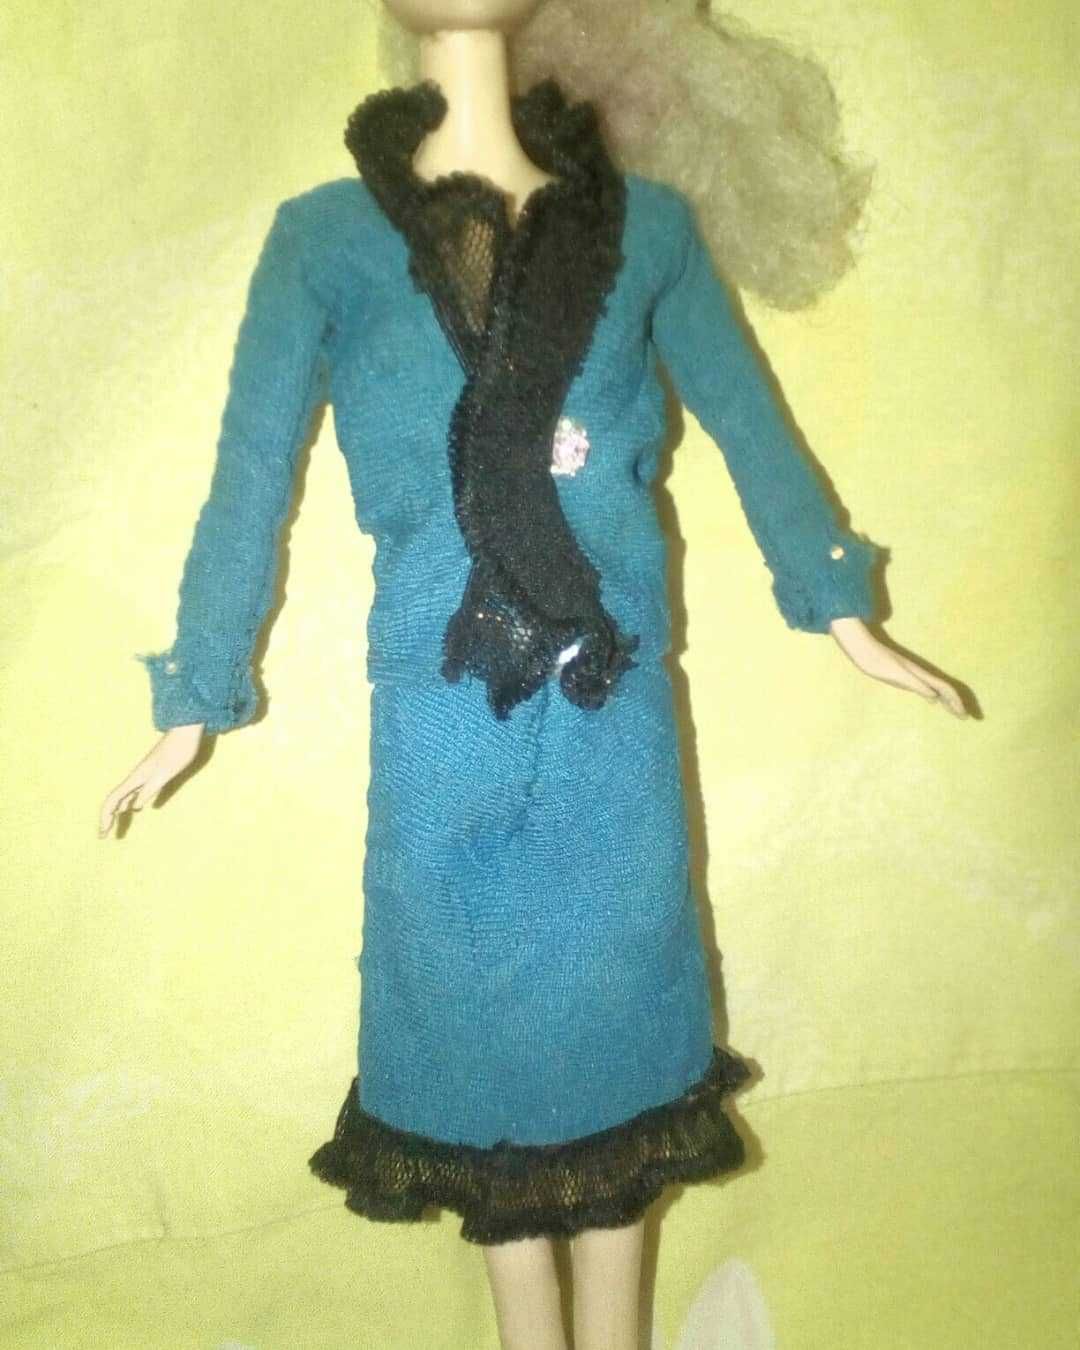 Куклы и одежда для кукол